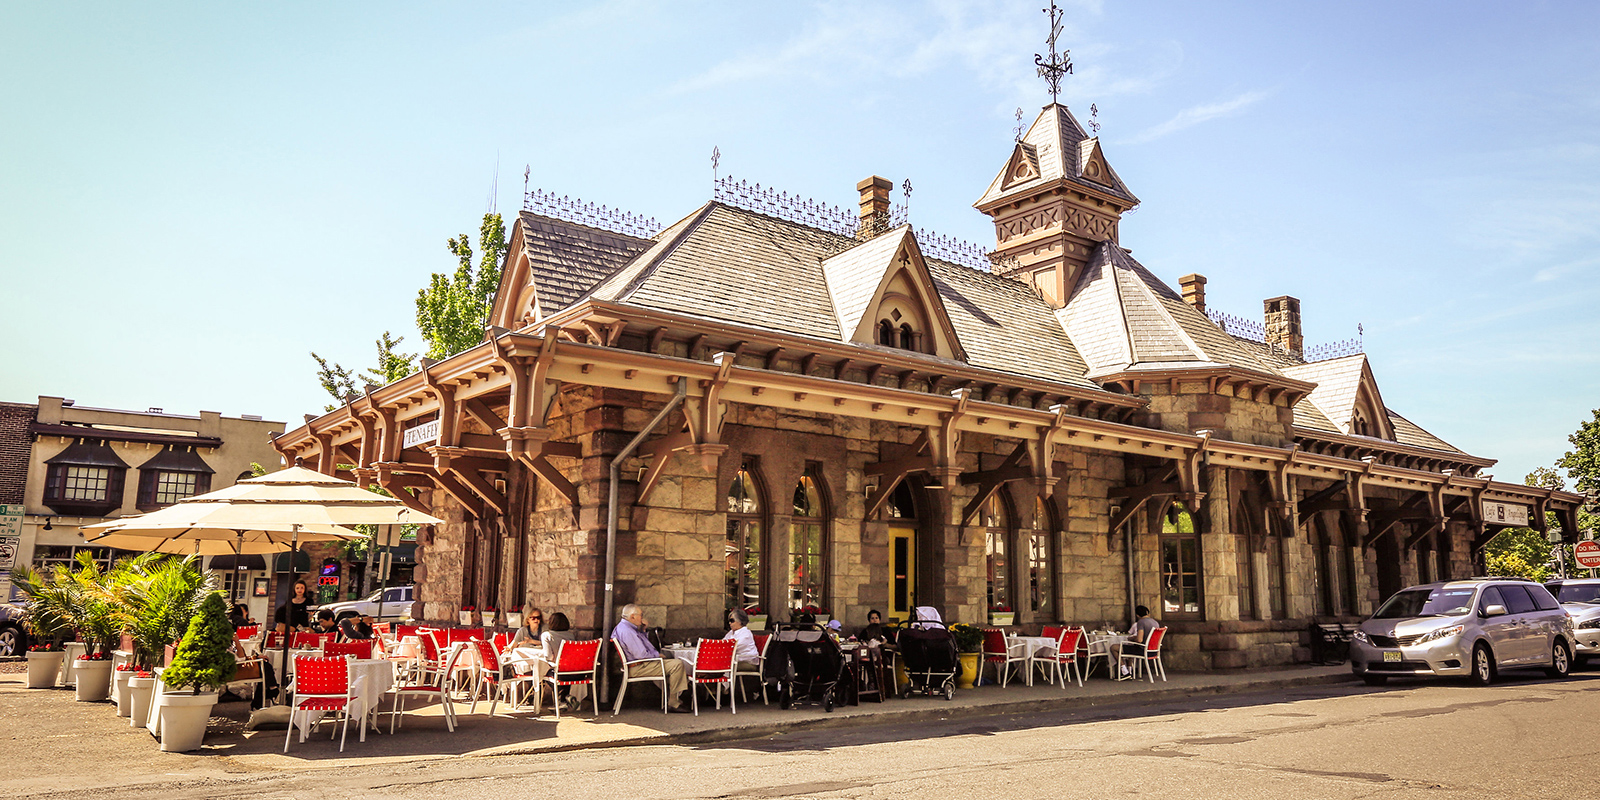 Tenafly cafe inside a old train station